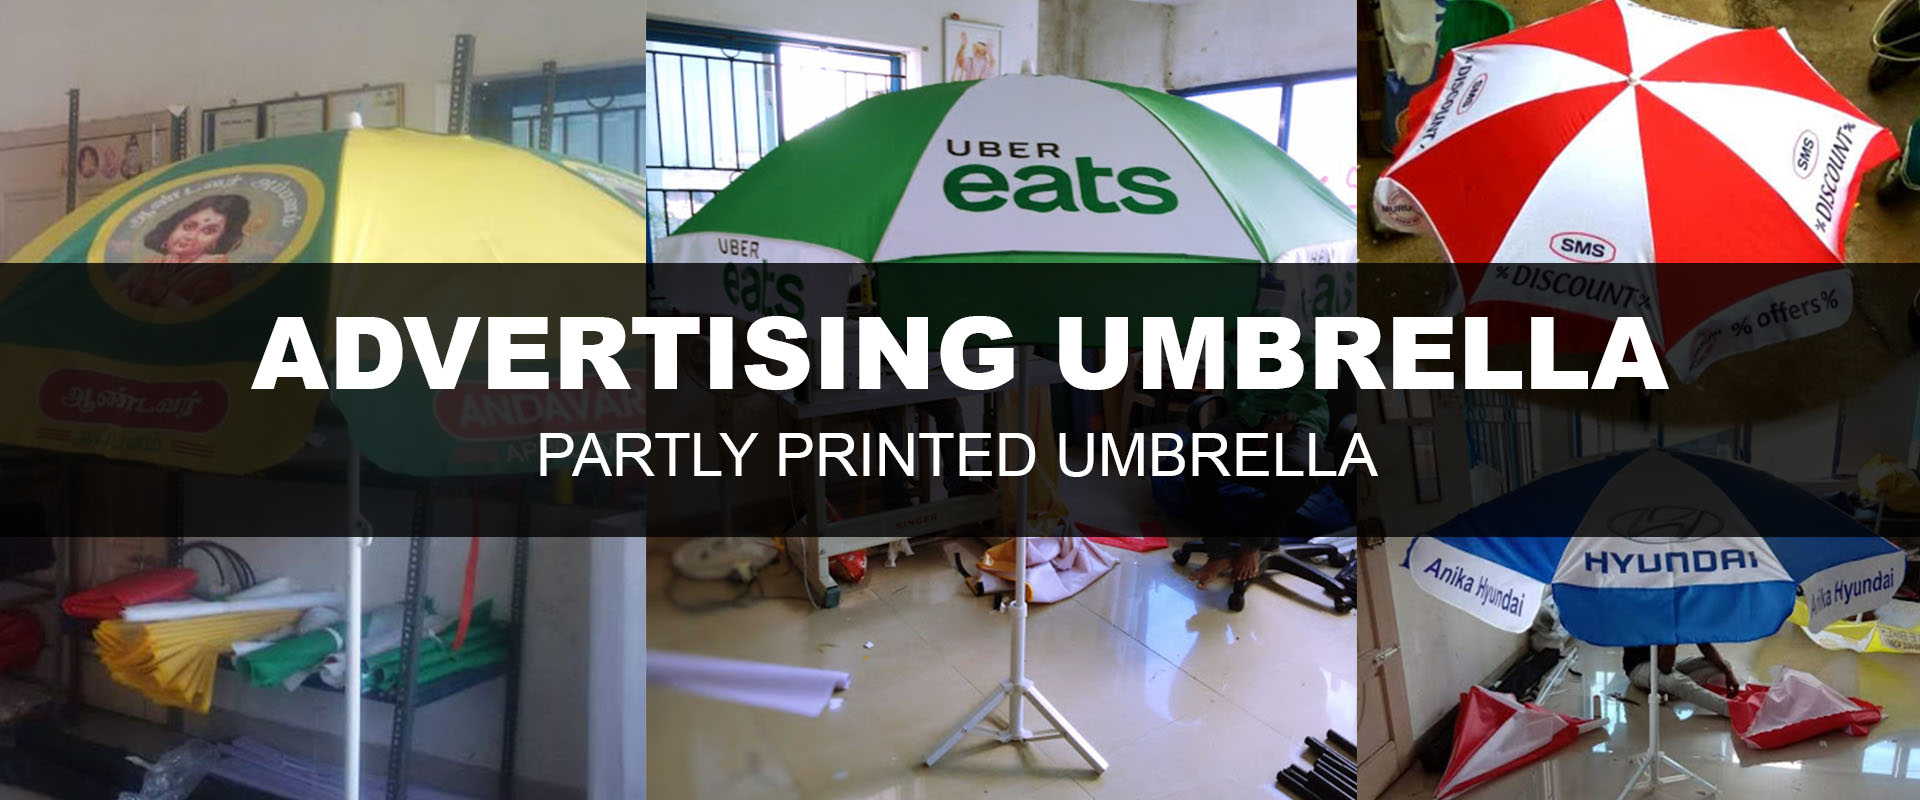 umbrella-slide-3